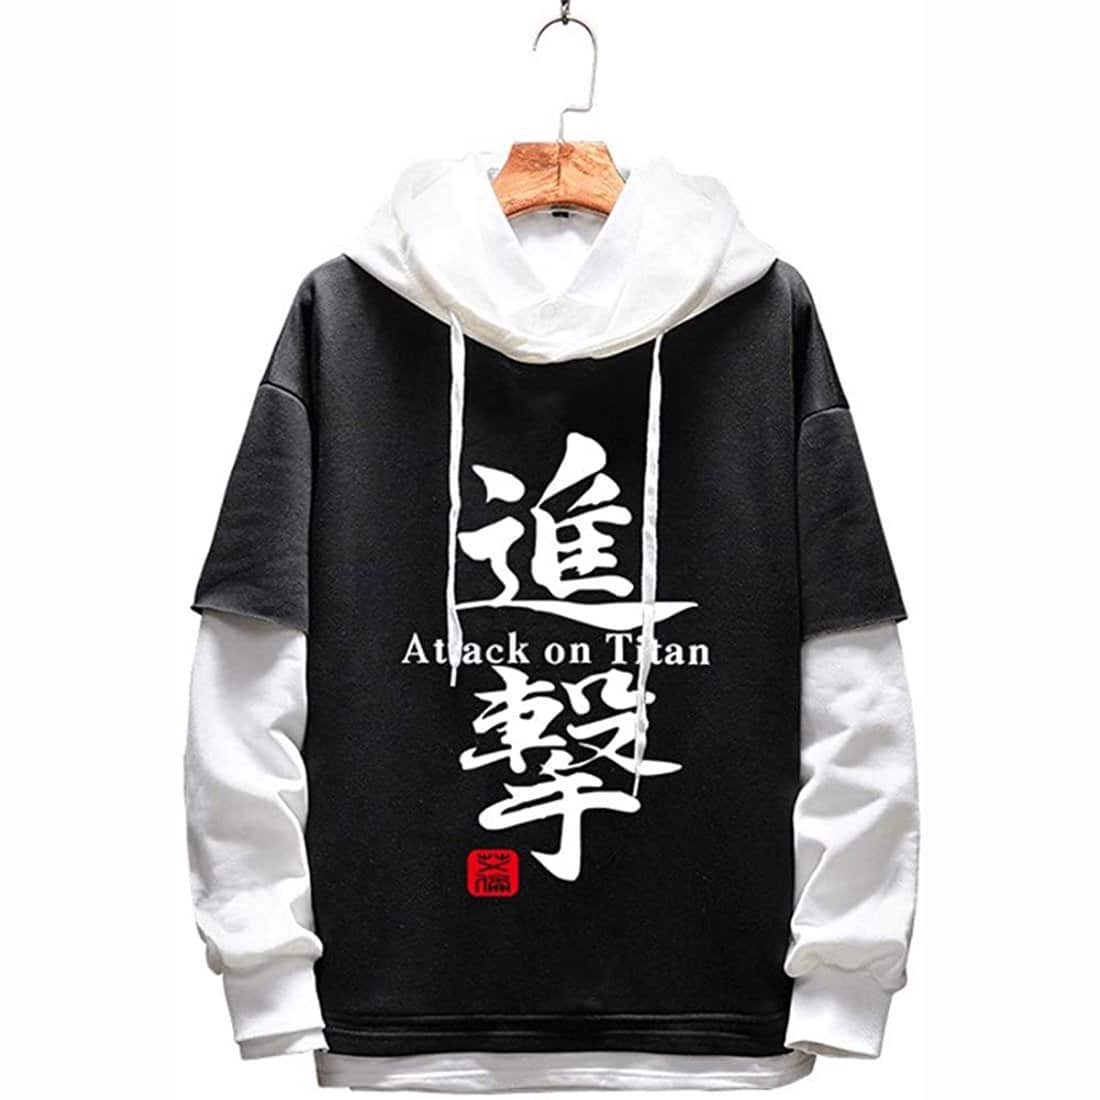 Anime Attack on Titan Jacket Coat Eren Jaeger Graphic Black white stitching Hoodie Cosplay Unisex